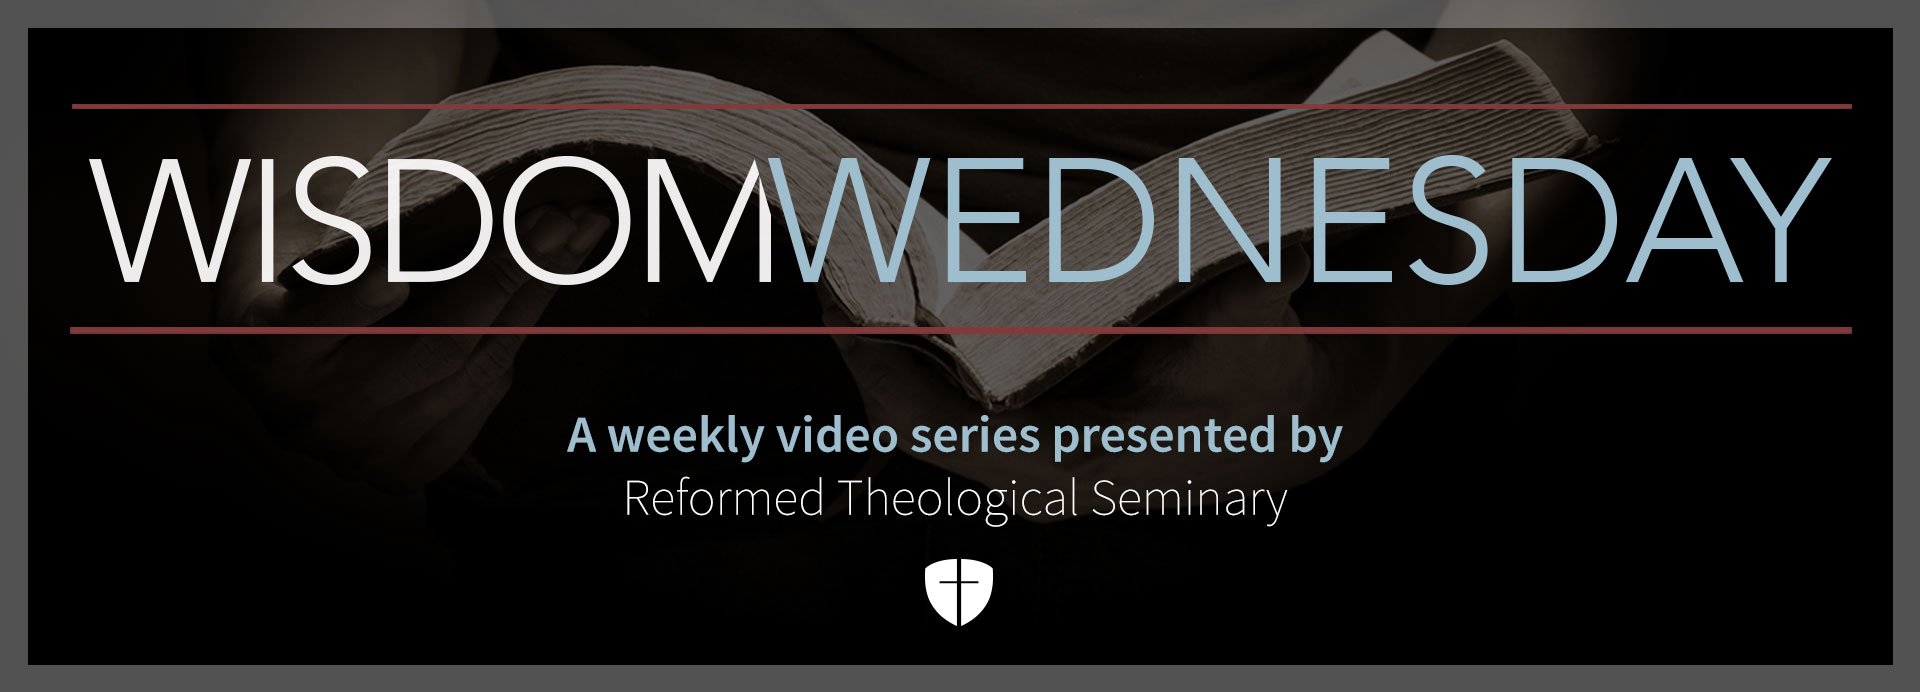 Ash Wednesday Videos - Progressive Church Media